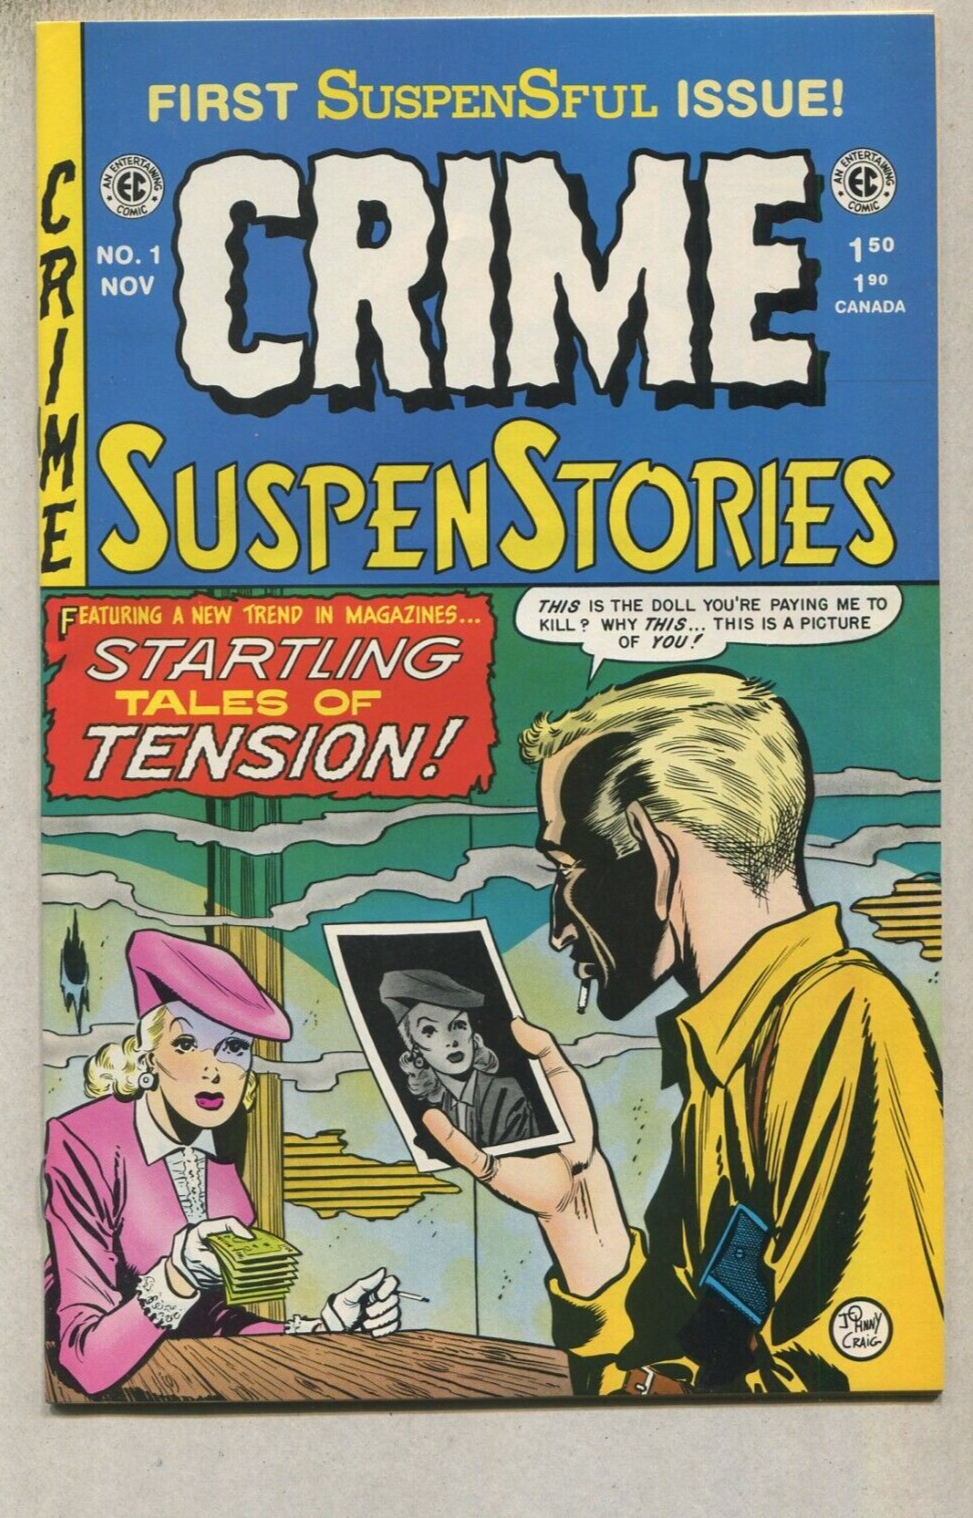 Crime-Suspen Stories #1 NM 1st SuspenSful Issue Russ Cochran Publisher CBX3